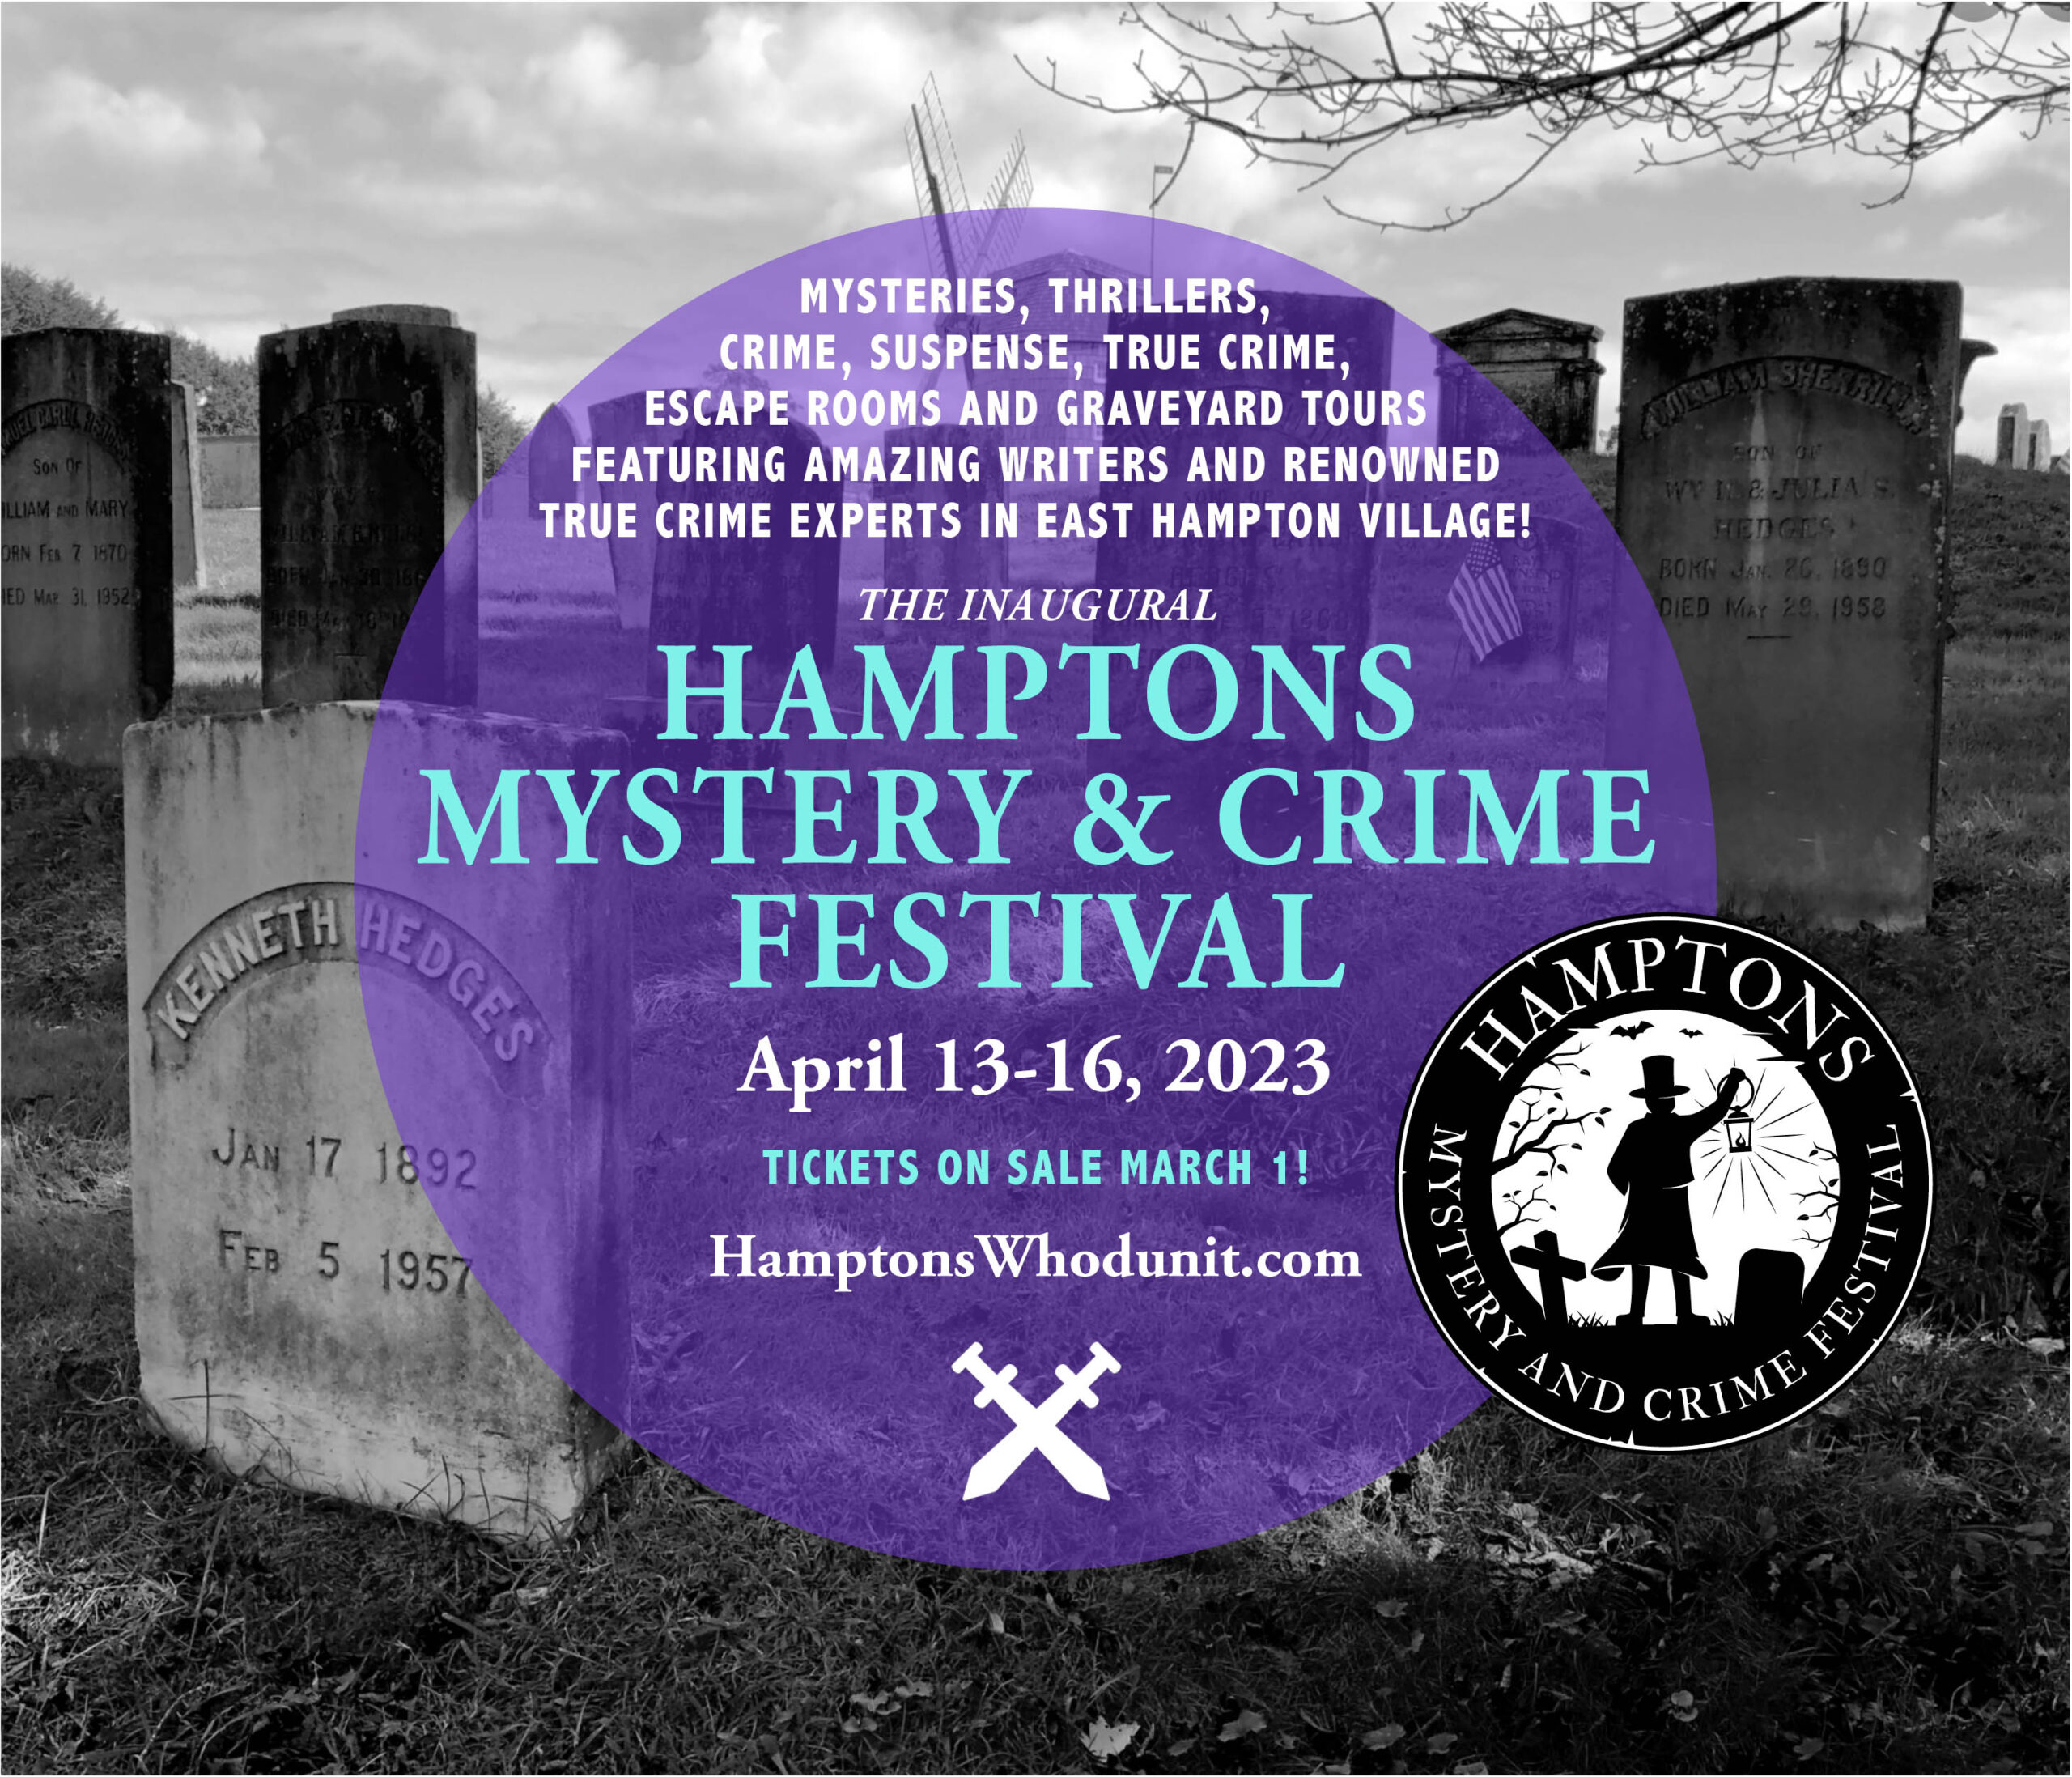 Hamptons Whodunit, A Mystery & Crime Festival • James Lane Post • Hamptons  Culture & Lifestyle Magazine